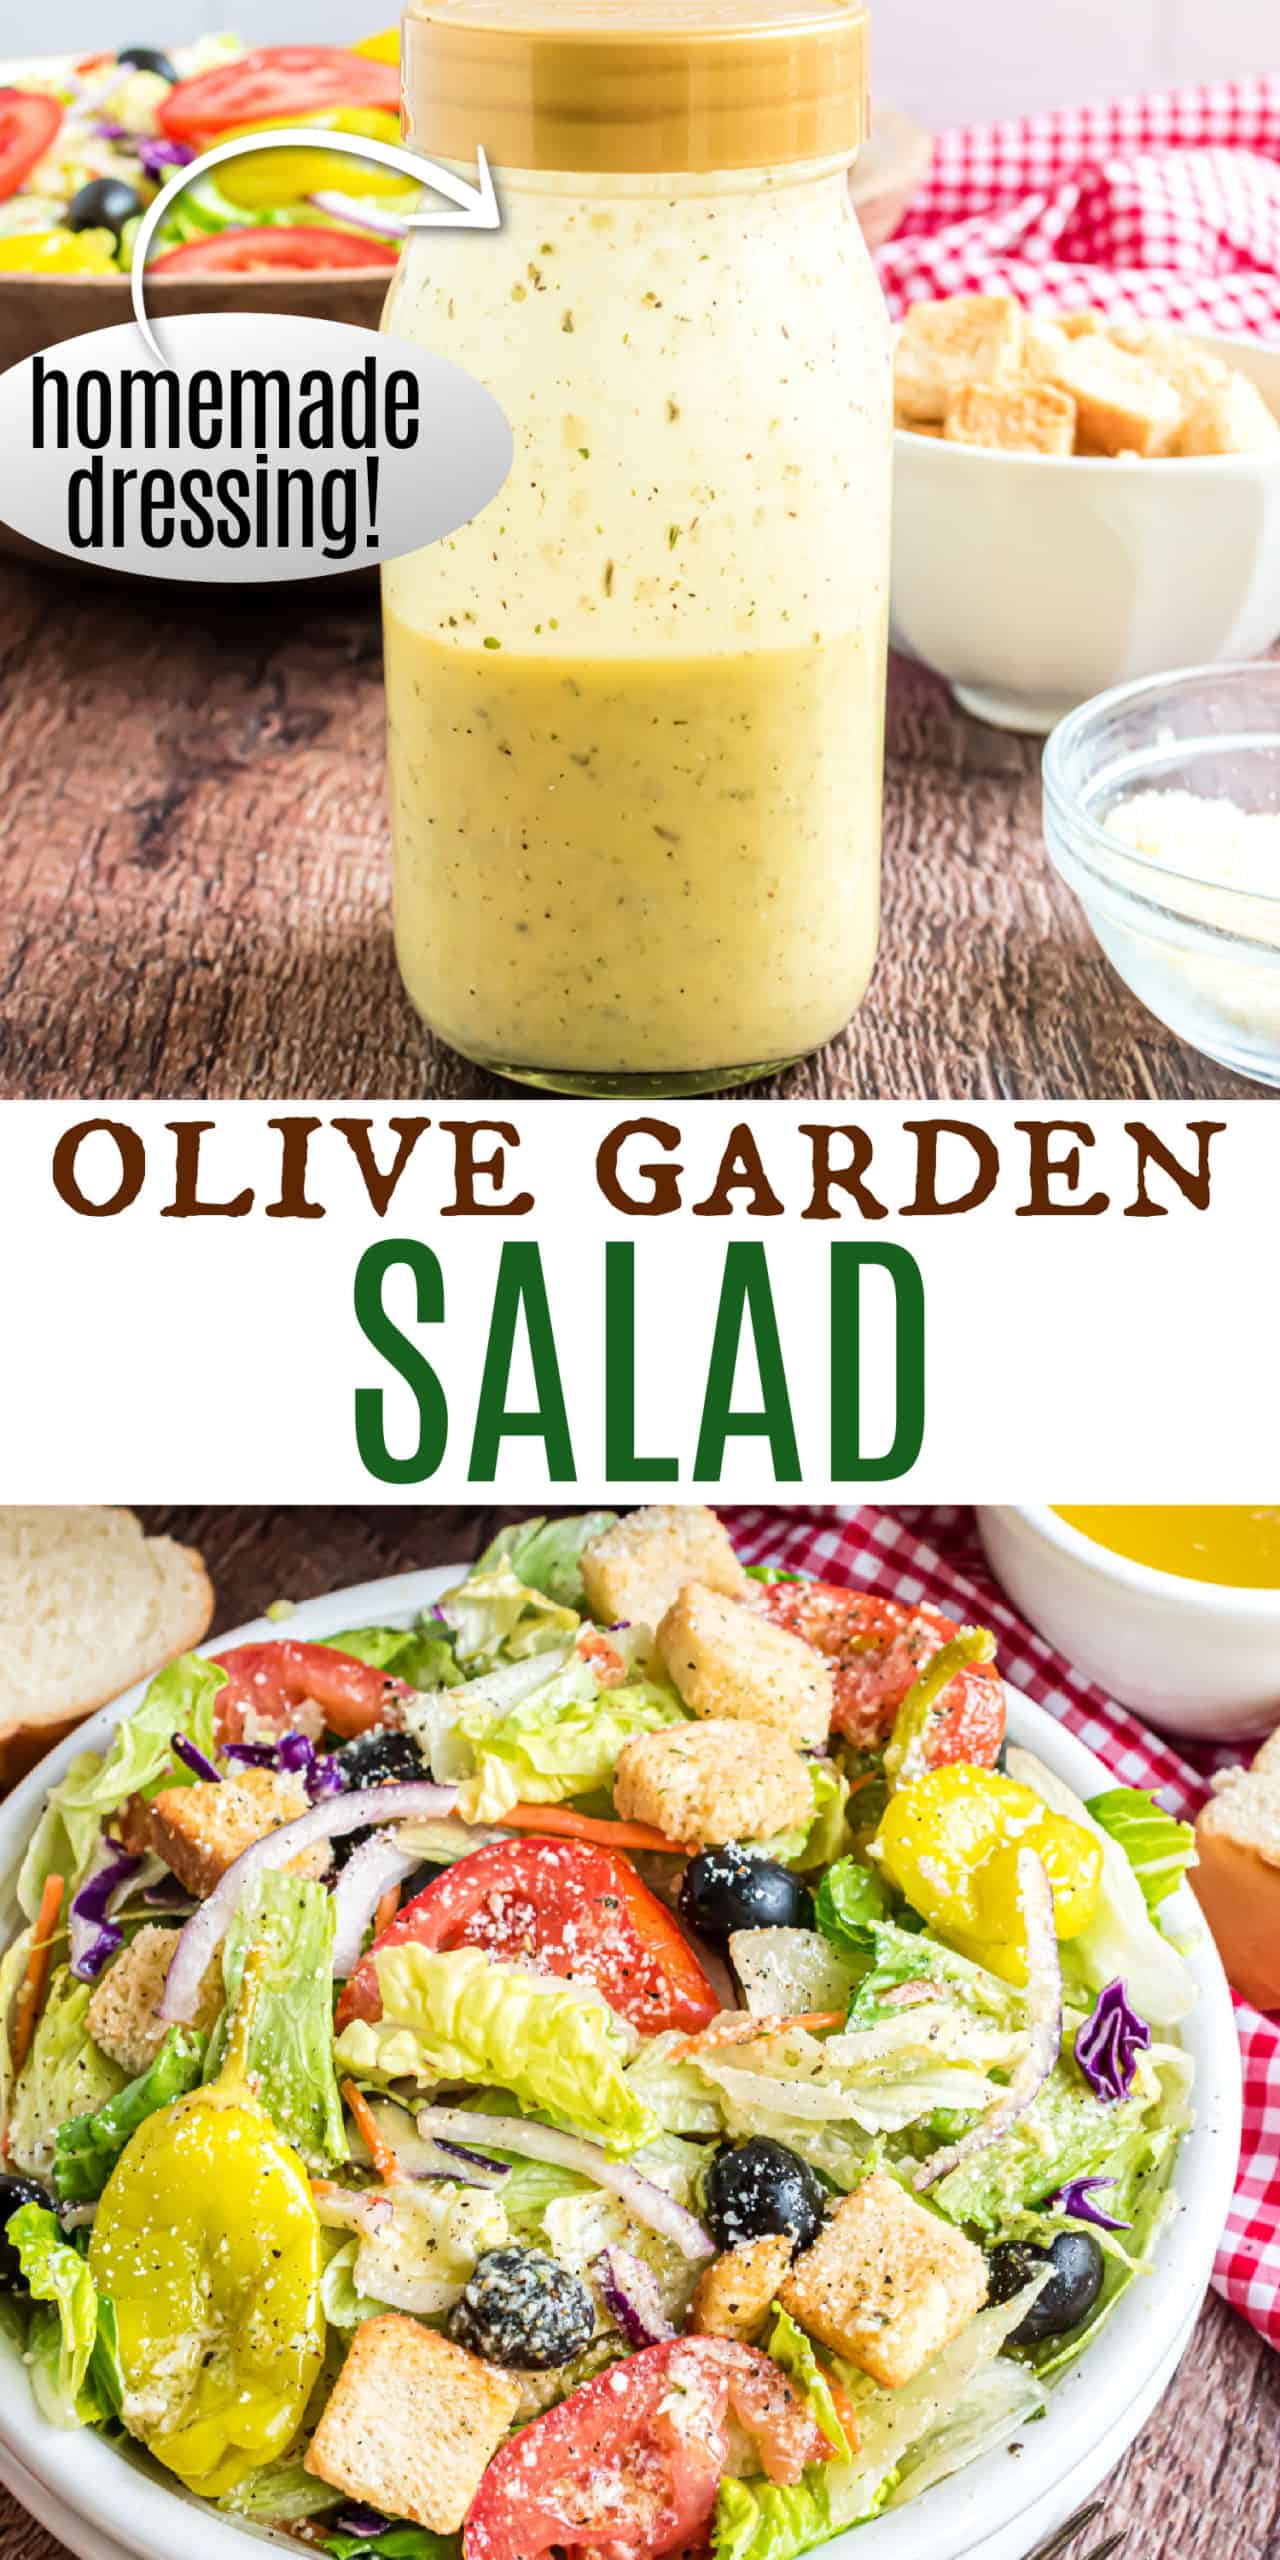 https://www.shugarysweets.com/wp-content/uploads/2019/02/olive-garden-salad-pin-scaled.jpg